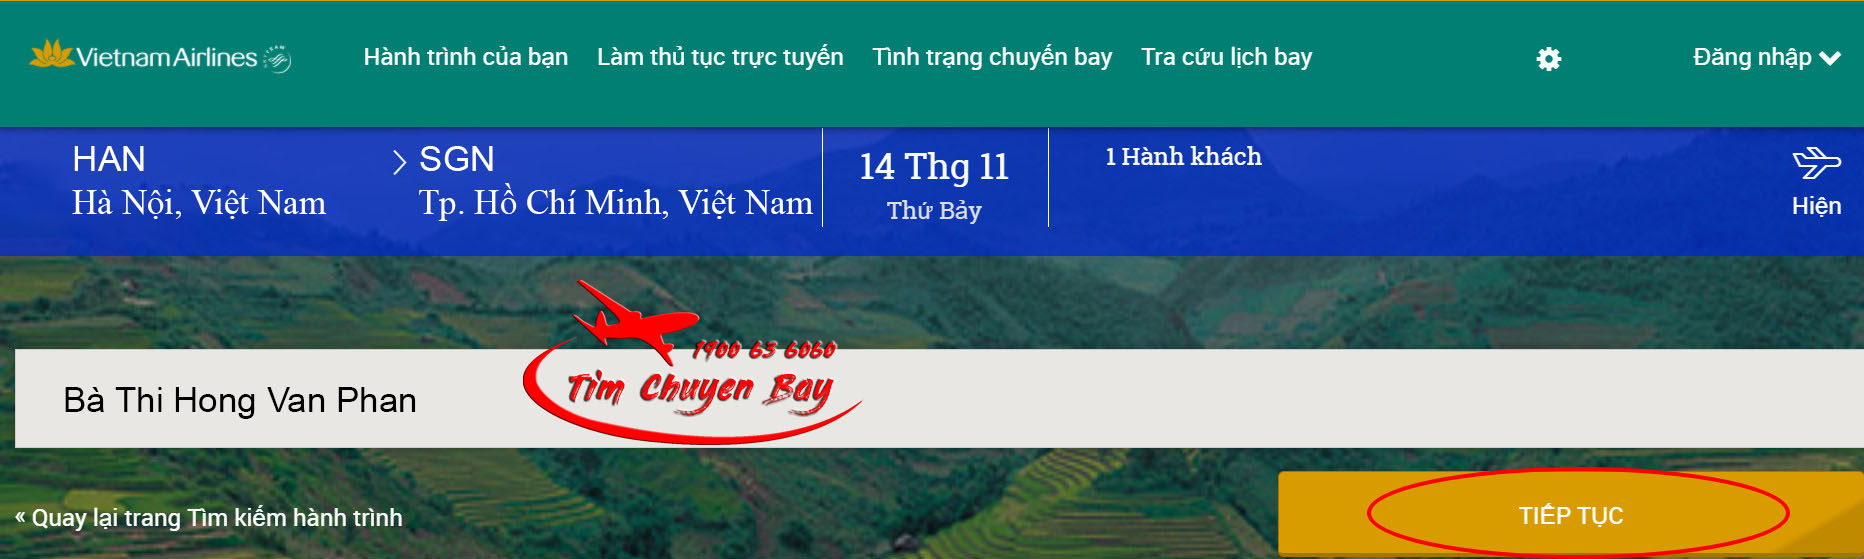 check in online Vietnam Airlines 1 1